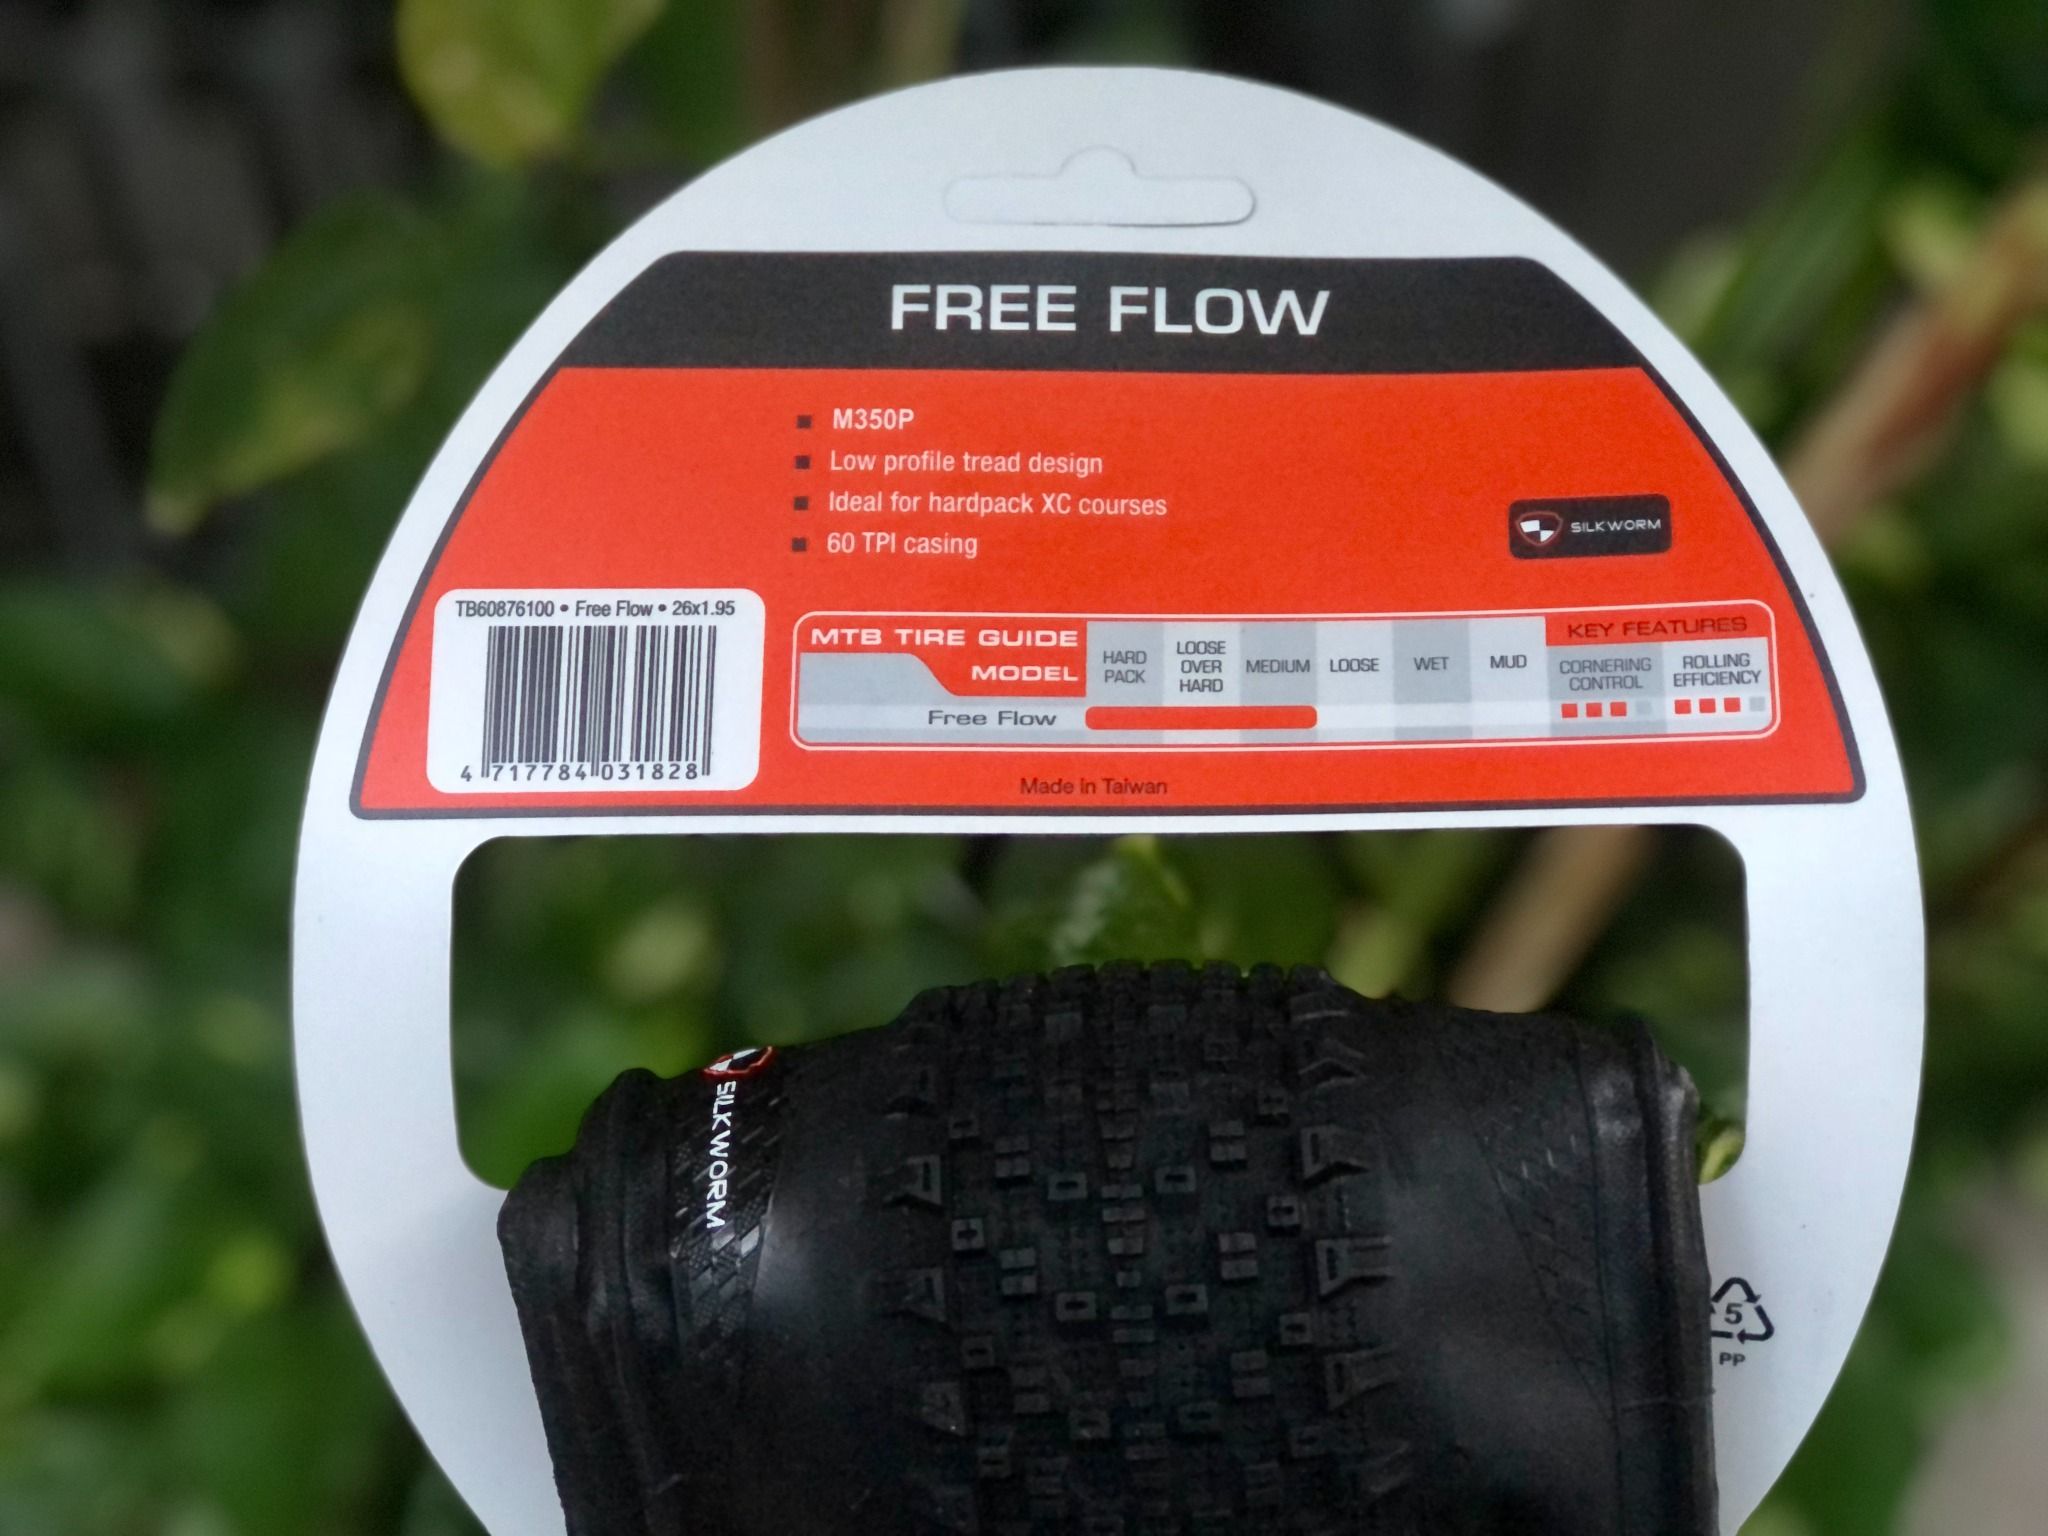  Lốp Maxxis Free Flow M350 26 × 1.95 tanh mềm 